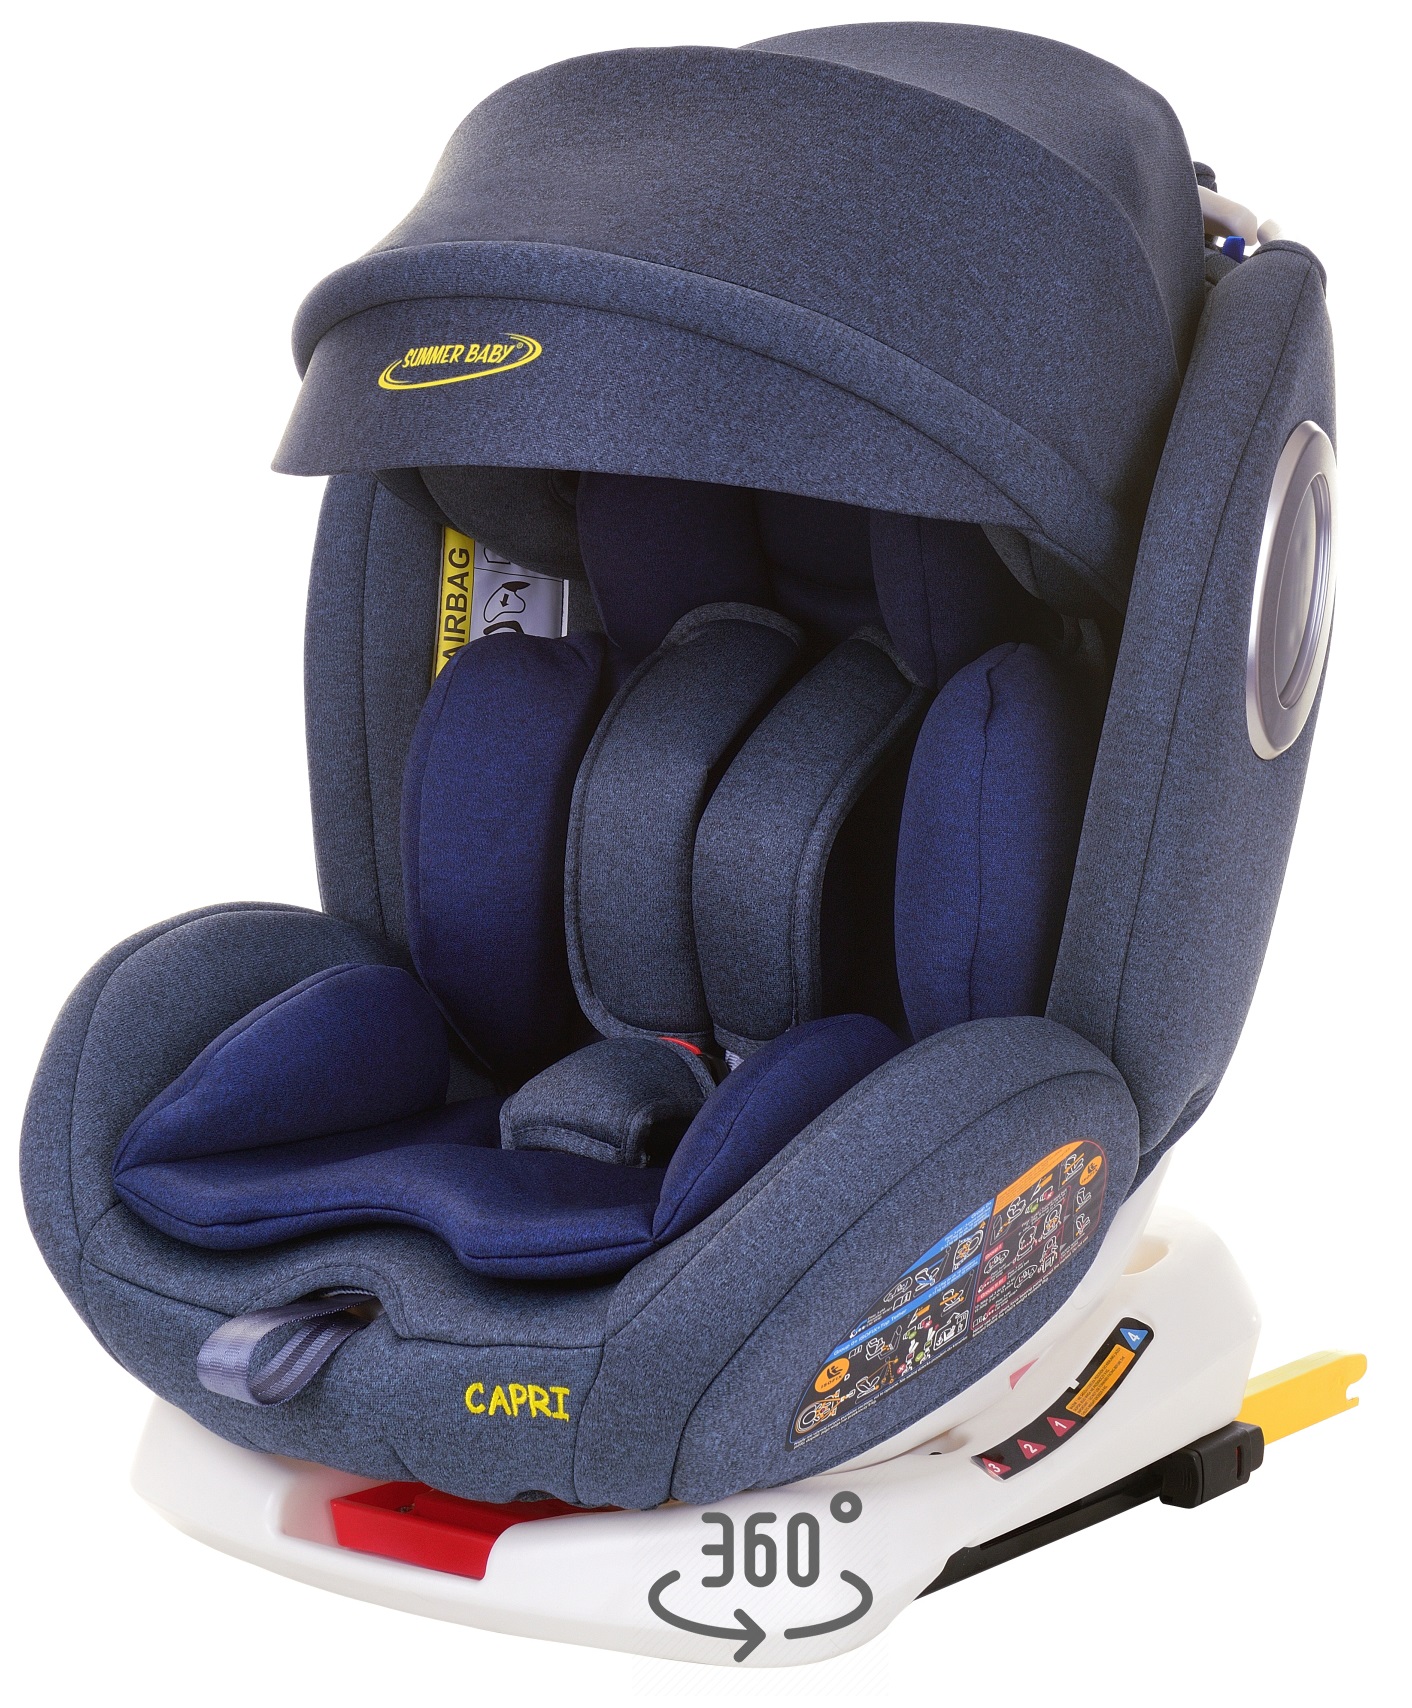 Scaun Auto Premium Rotire 360 pentru Copii „ISP CAPRI Baby LikeSMART”, 3 Grupe de Greutate intre 0-36 kg, Prindere Isofix, Reglarea Pozitiei de Somn si a Inaltimii Tetierei in Functie de Varsta, Albastru